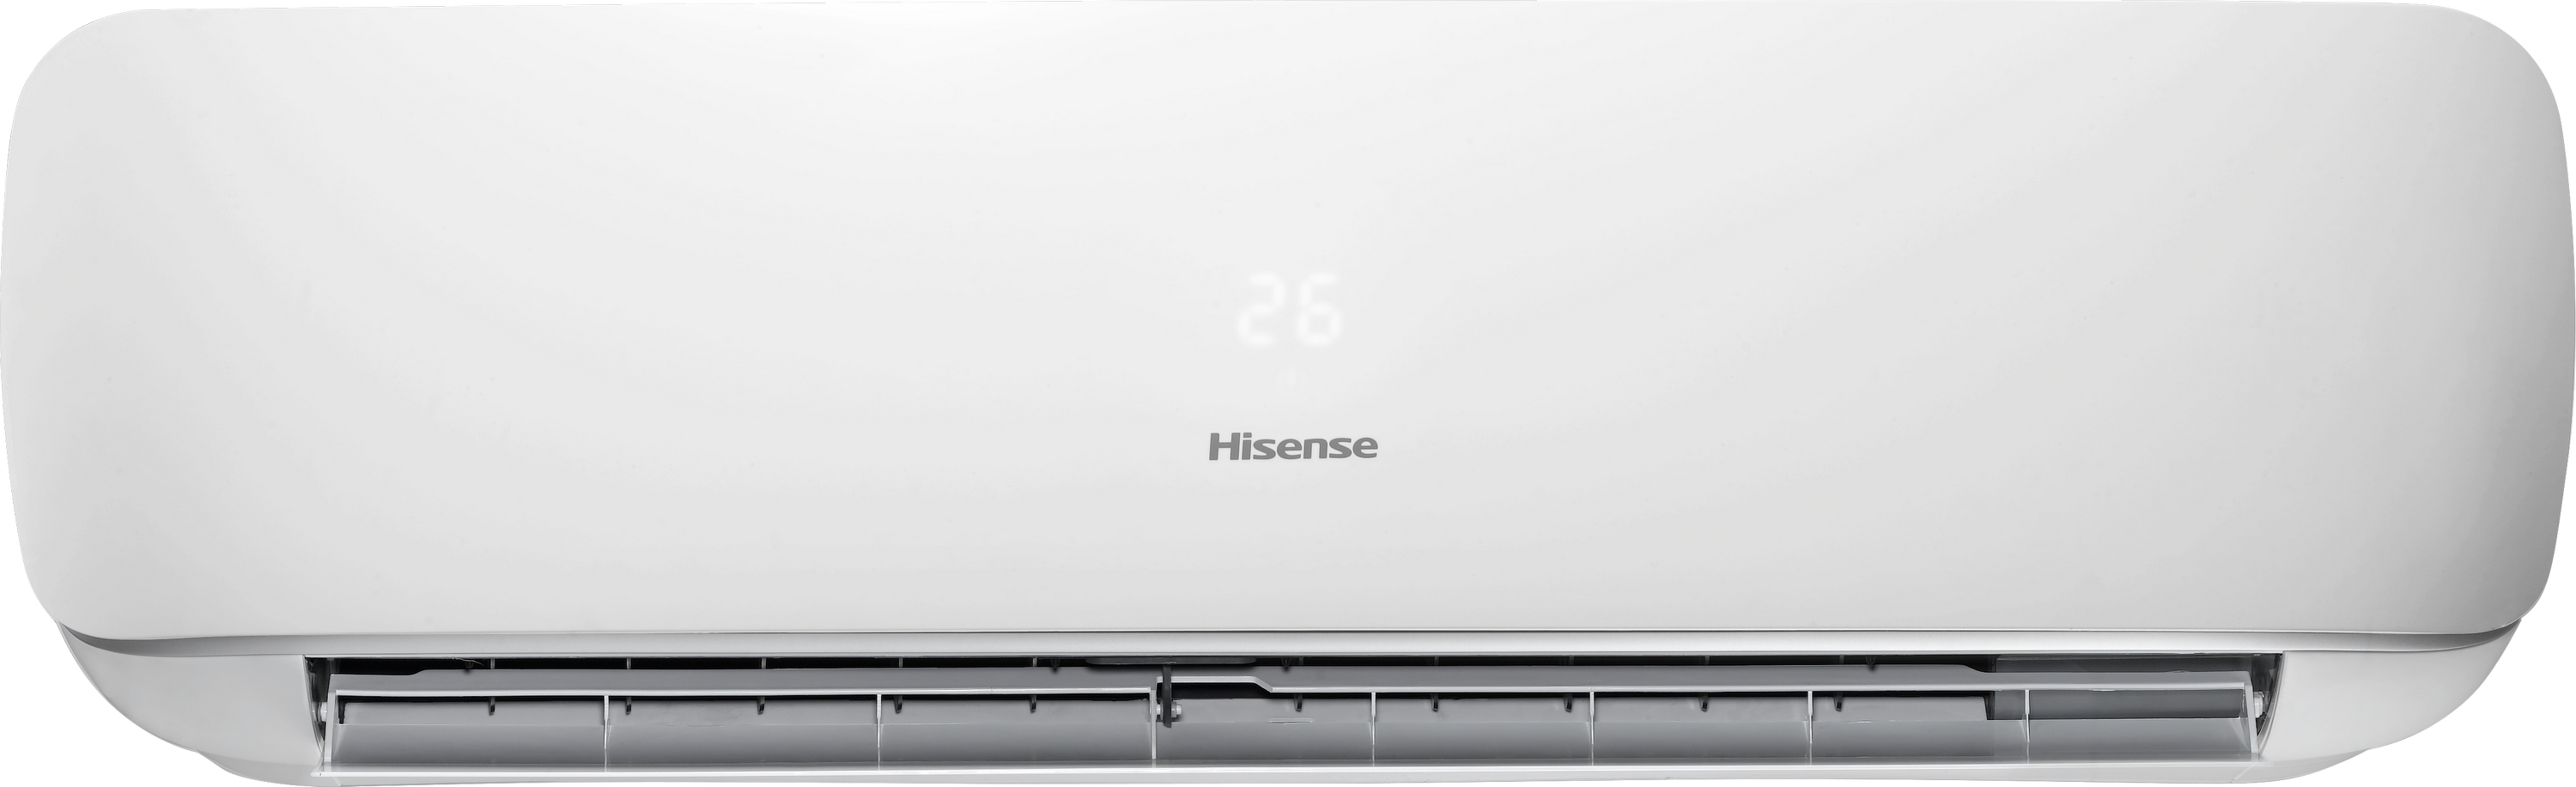 в продаже Кондиционер сплит-система Hisense Apple Pie R32 TG35VE0A - фото 3